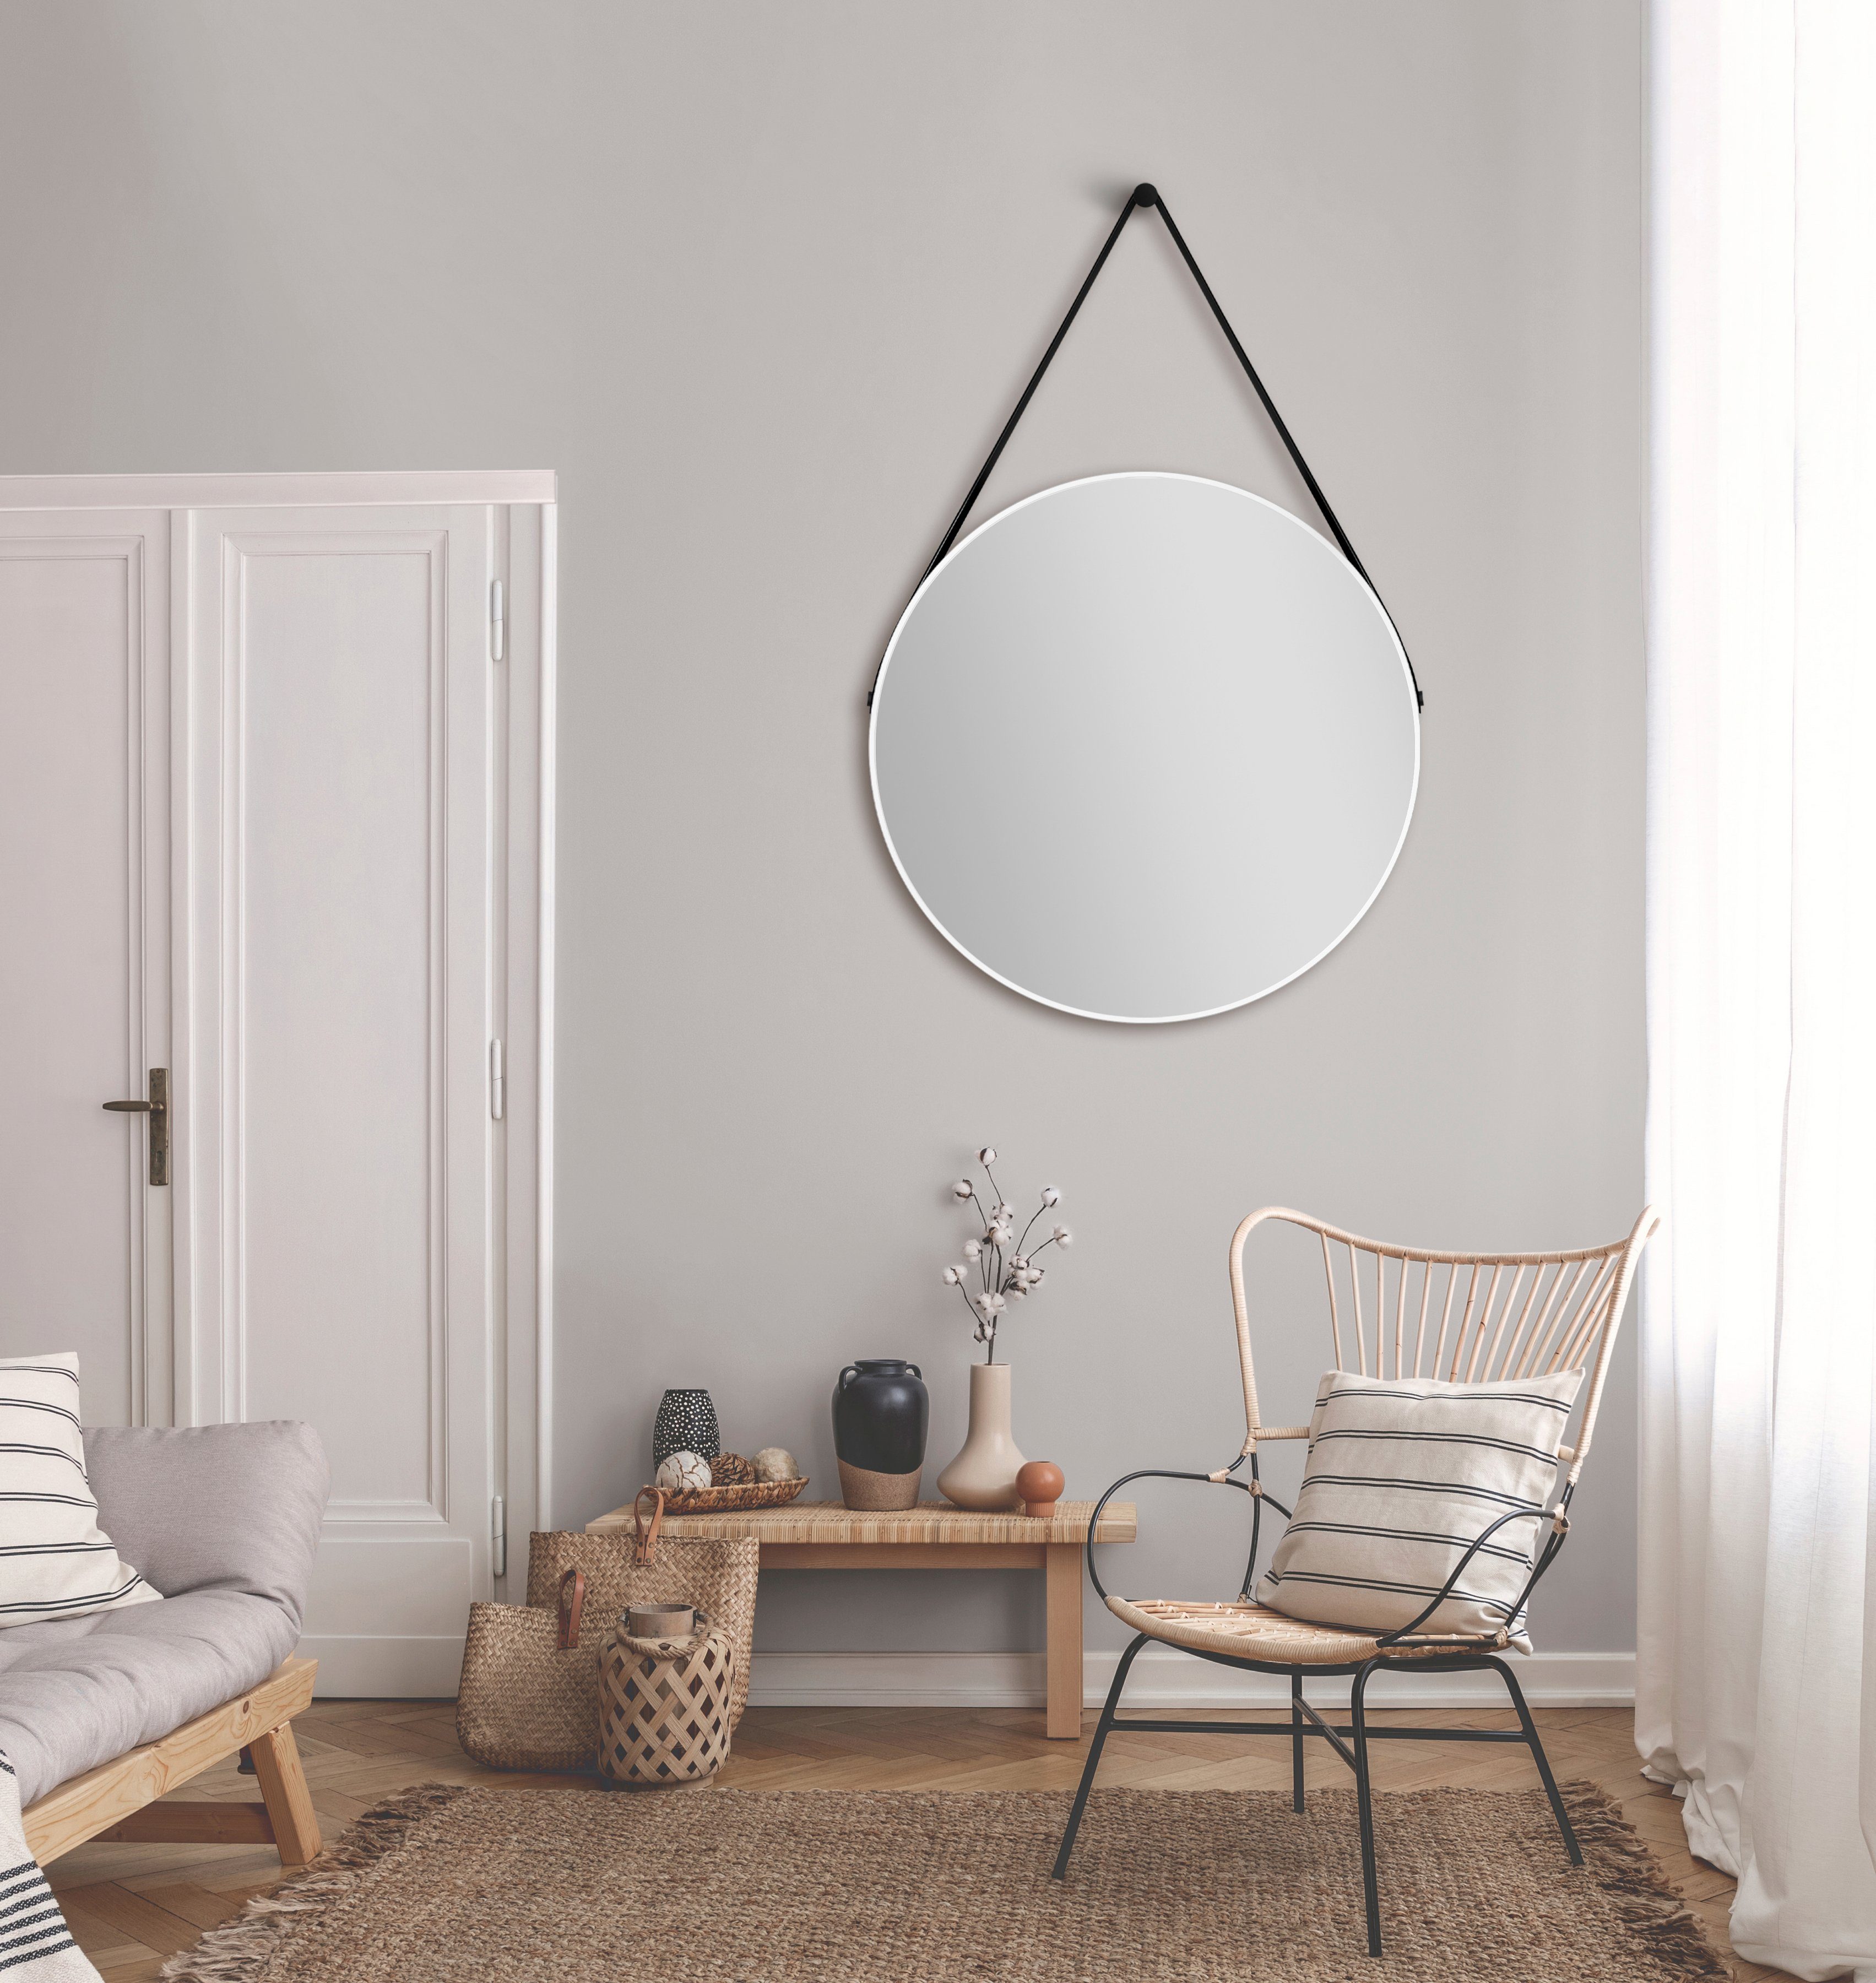 cm Spiegel Wandspiegel, Aluminiumrahmen, Ø mit dekorativer runder 80 Talos matt weiß